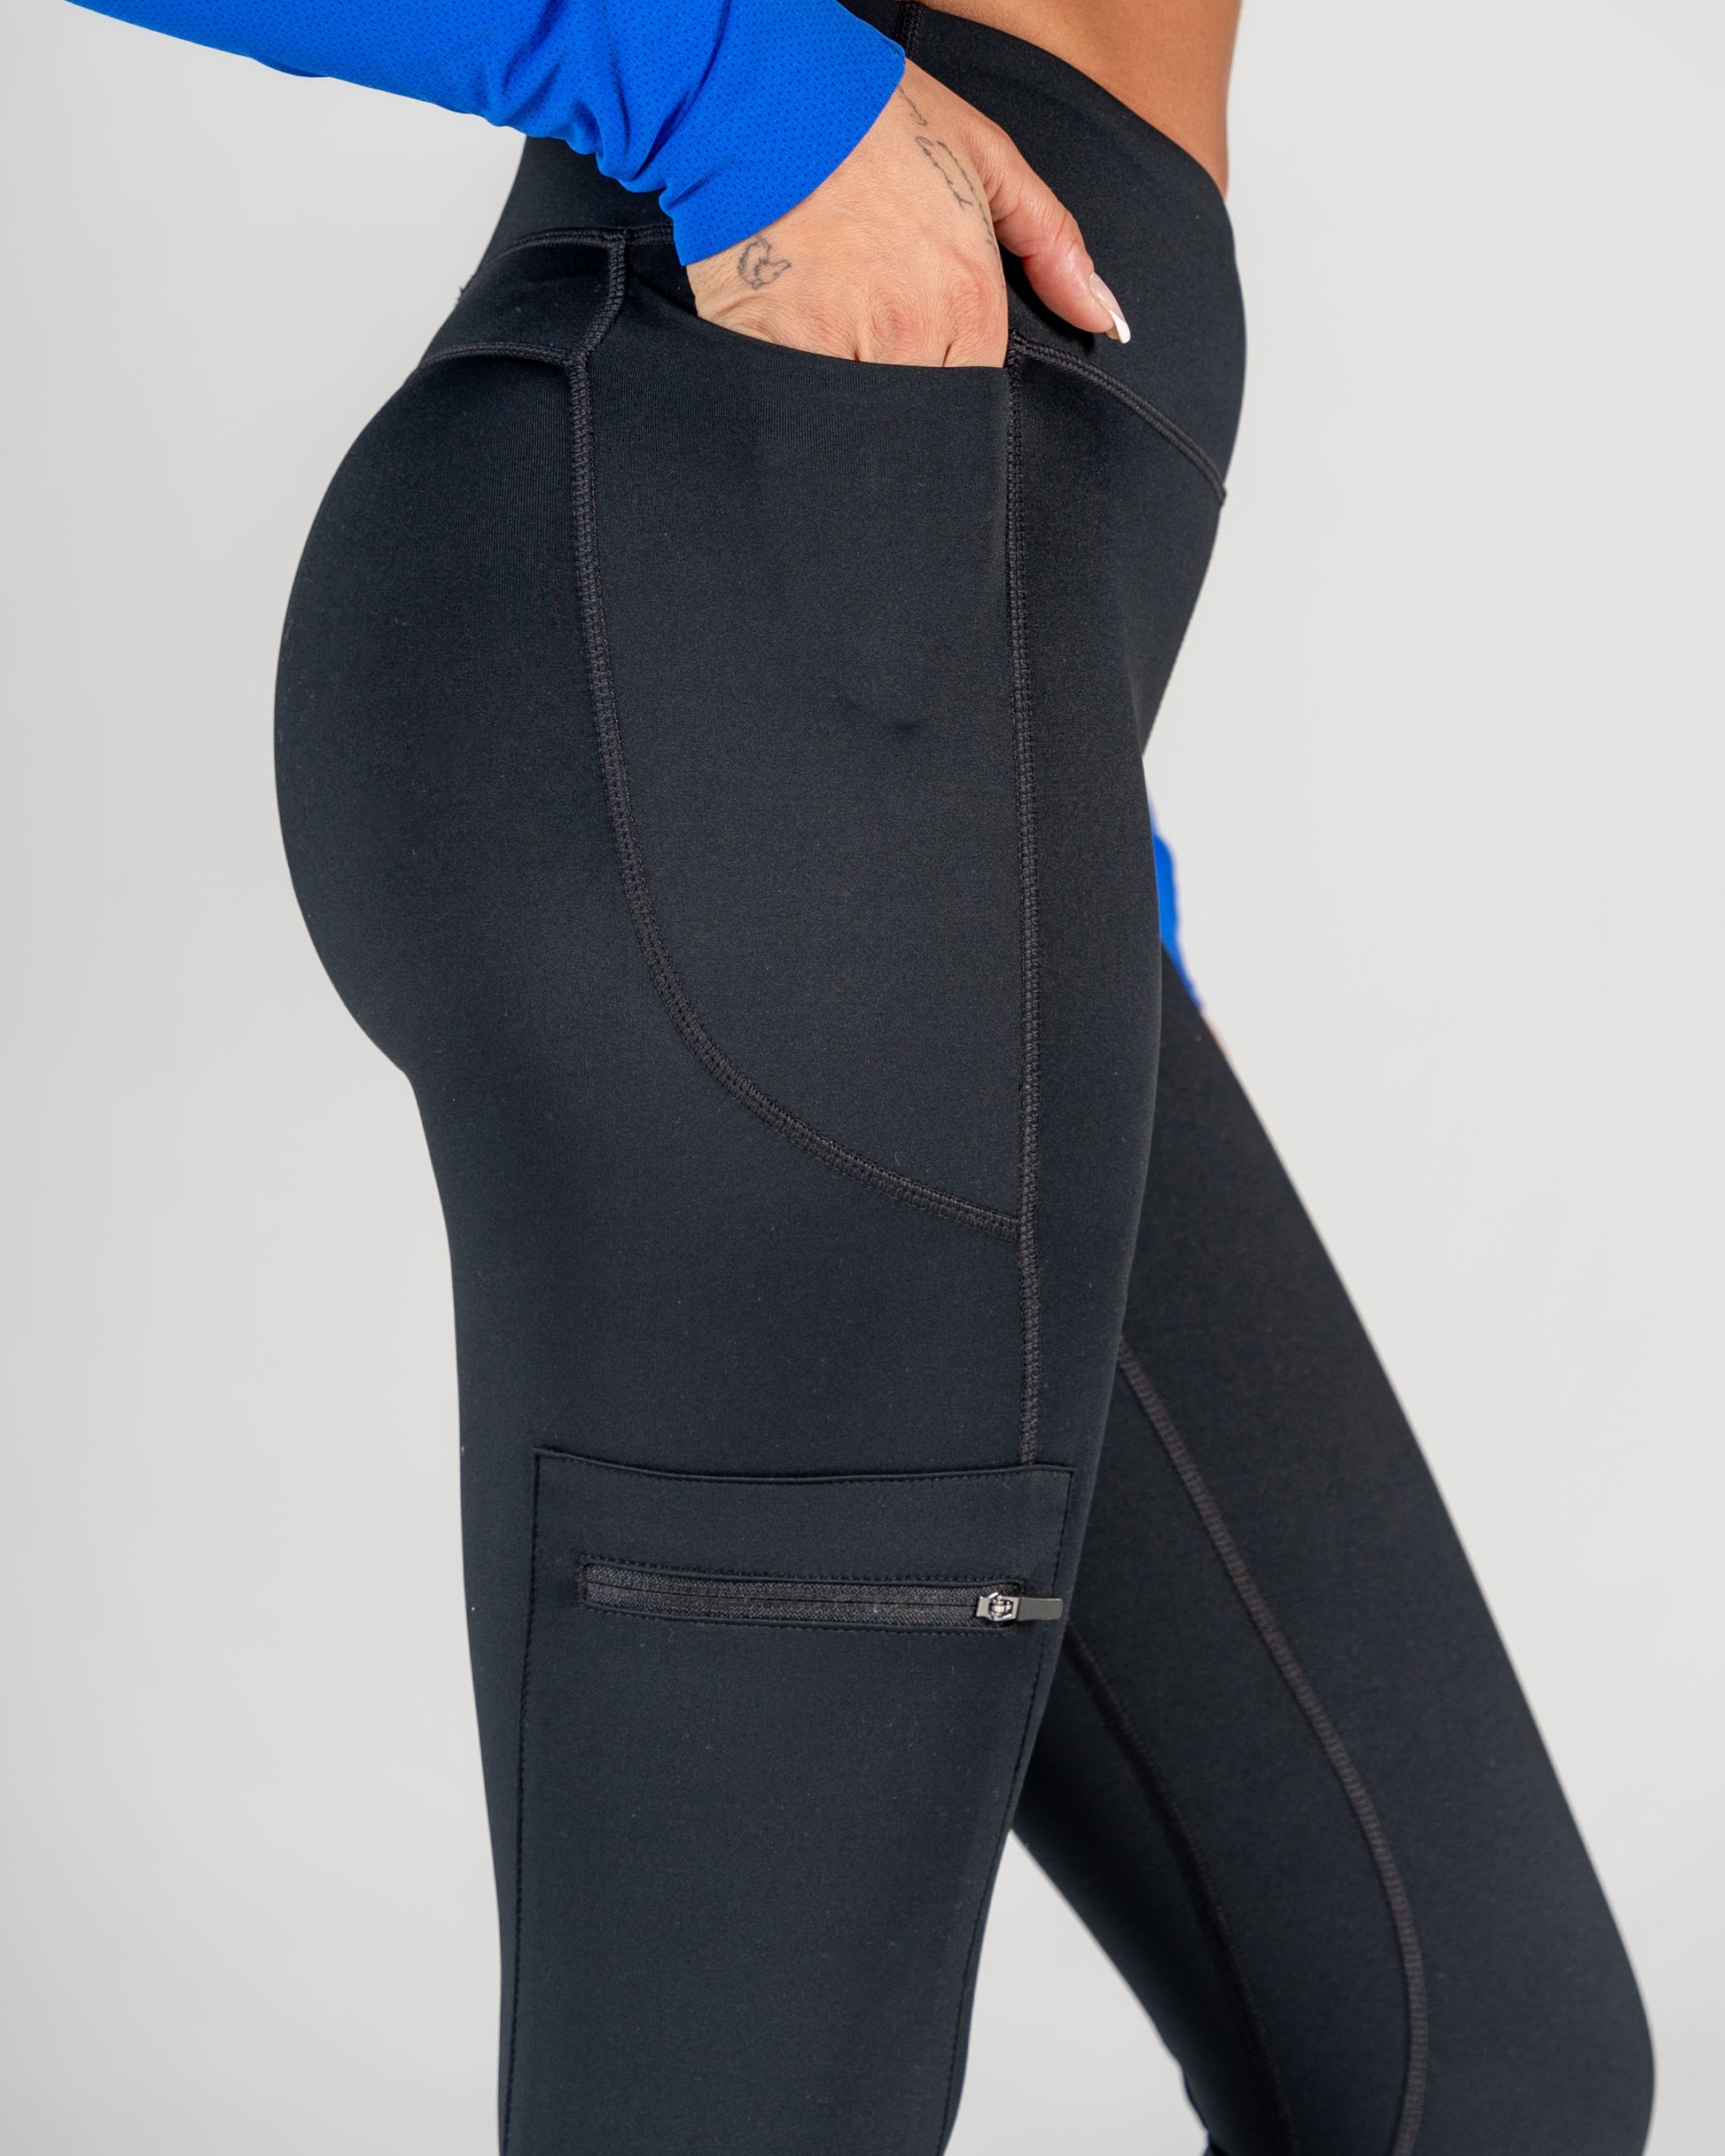 Senita Madelyn Black Workout Leggings Size XS Mesh Panels High Waist  Pockets